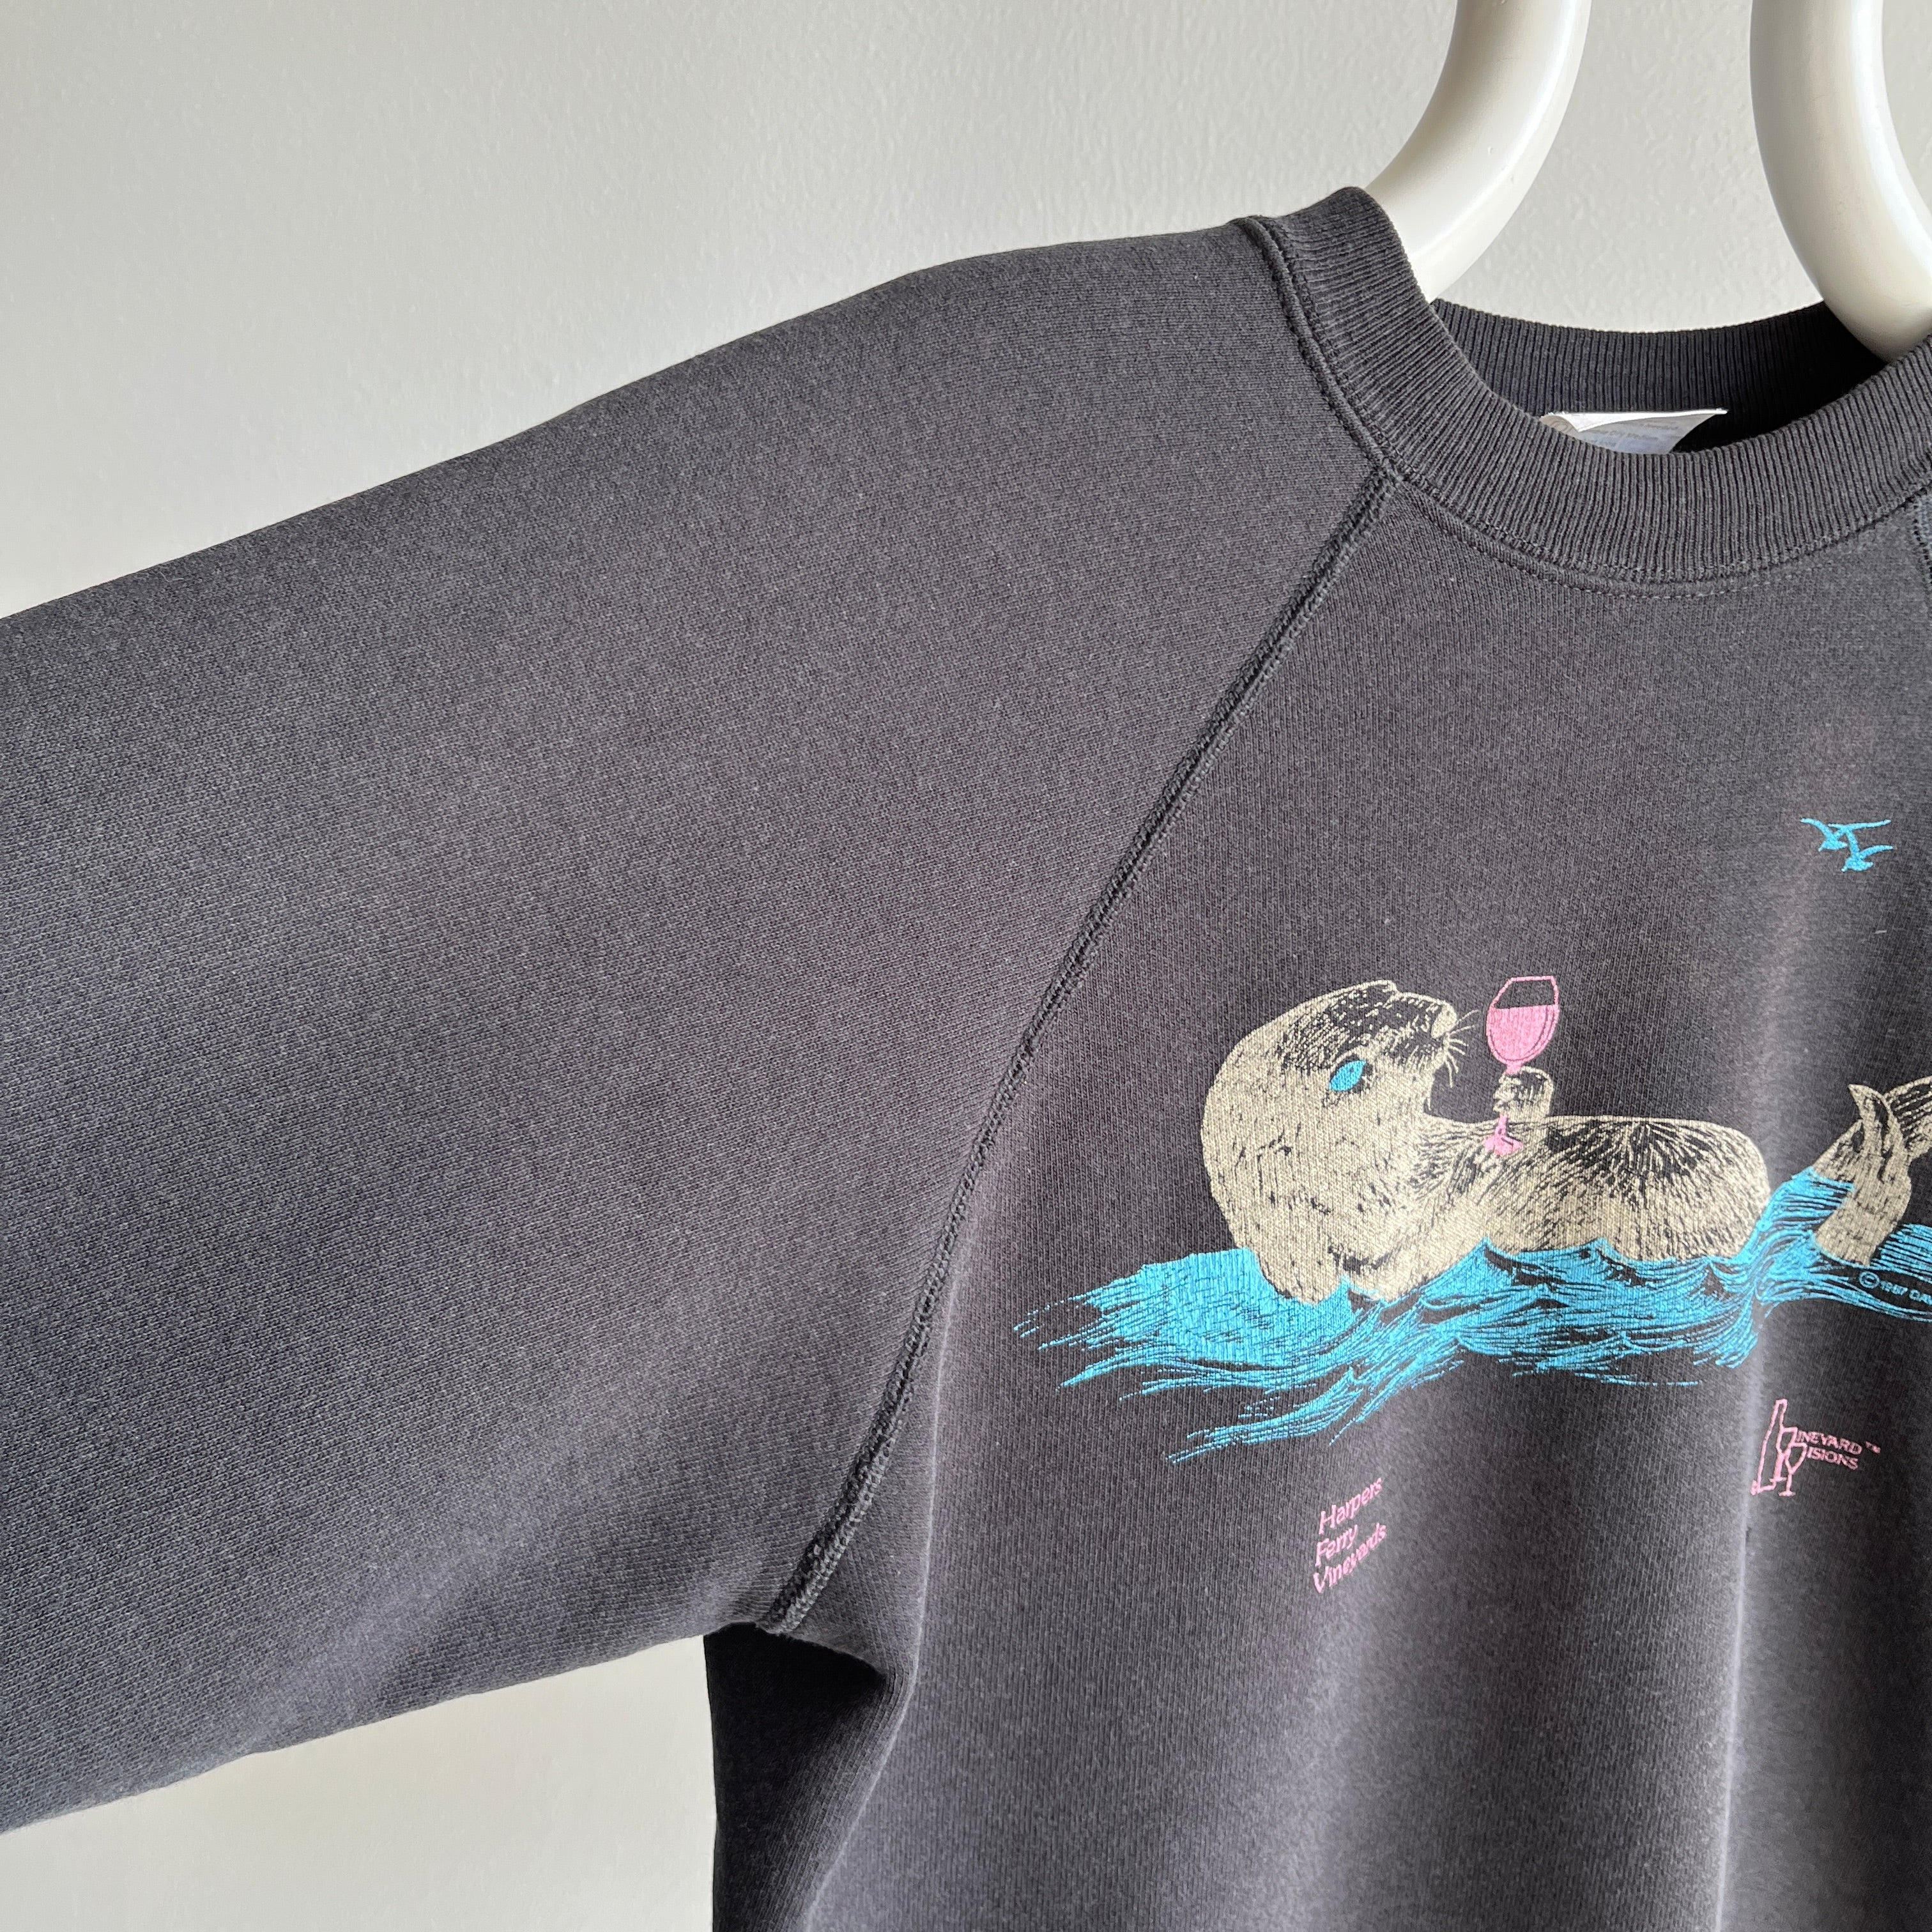 1987 Harpers Ferry Vineyards - Sea Otter Drinking Wine - Perfectly Worn Sweatshirt